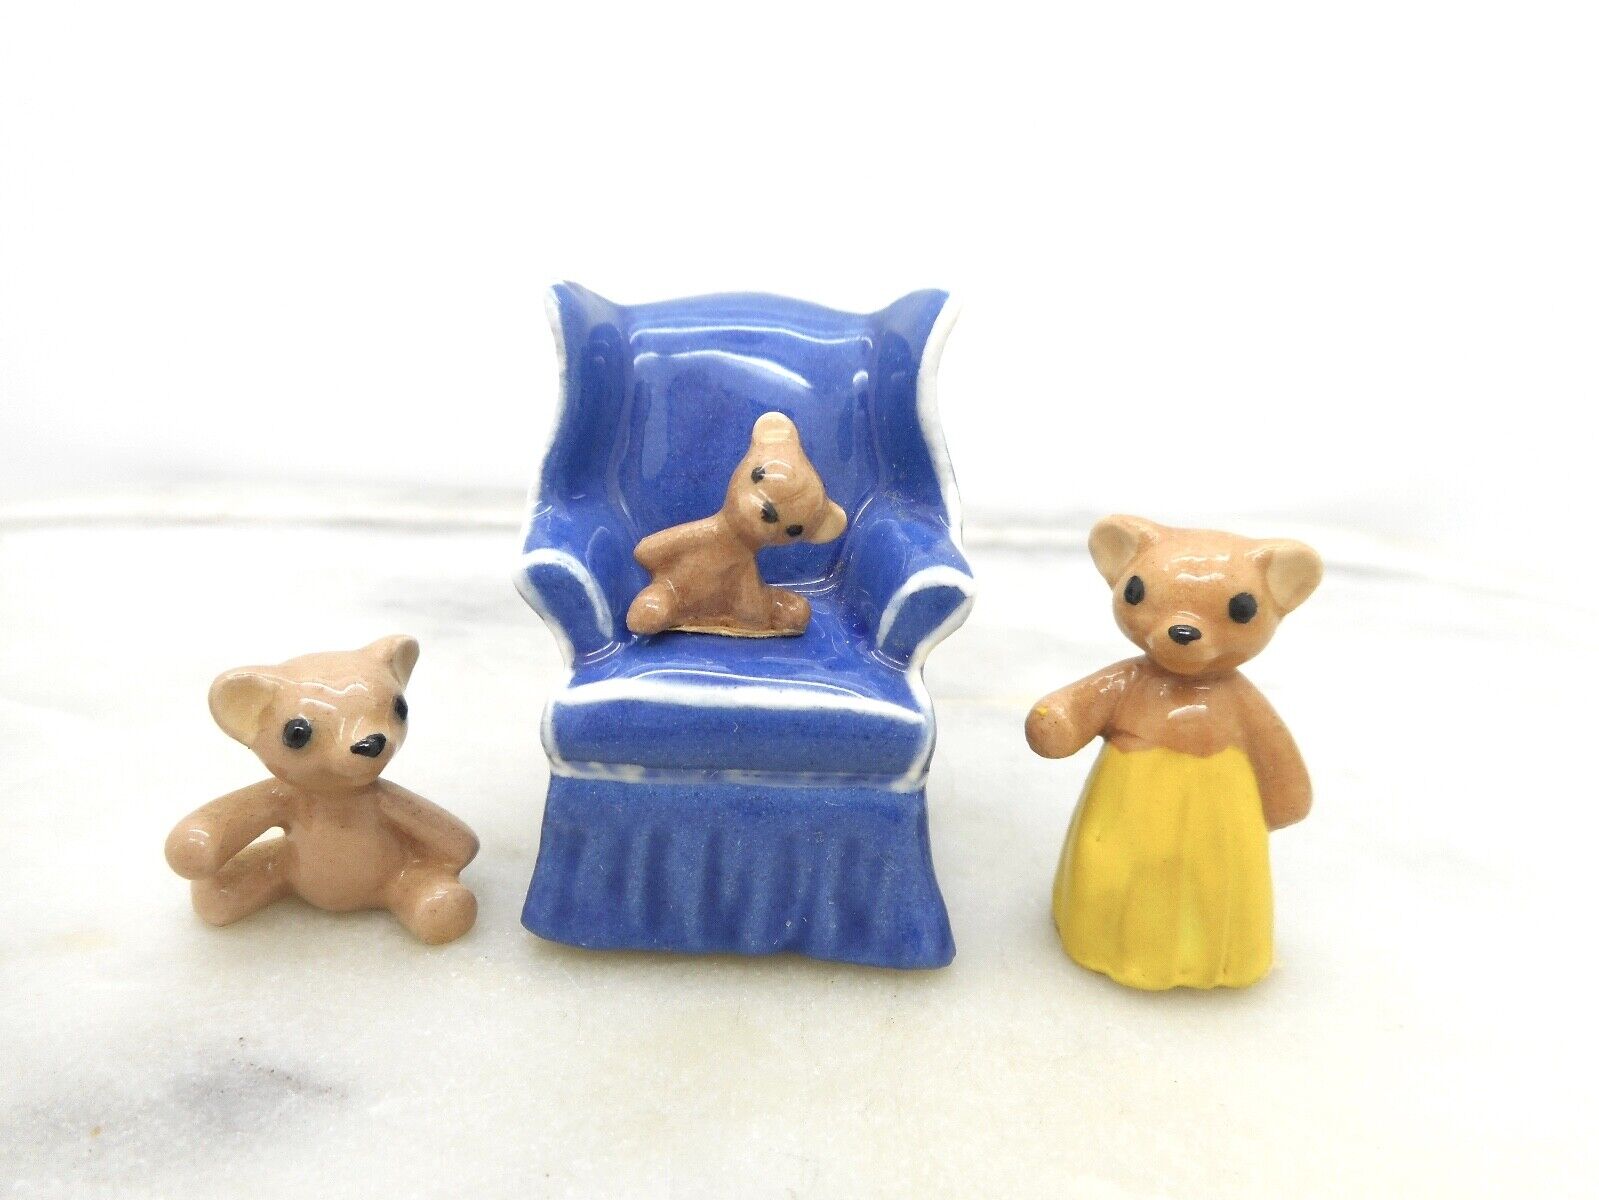 Vintage Hagan Renaker Discontinued Teddy Bears 4 Figurines 1970's Collectible